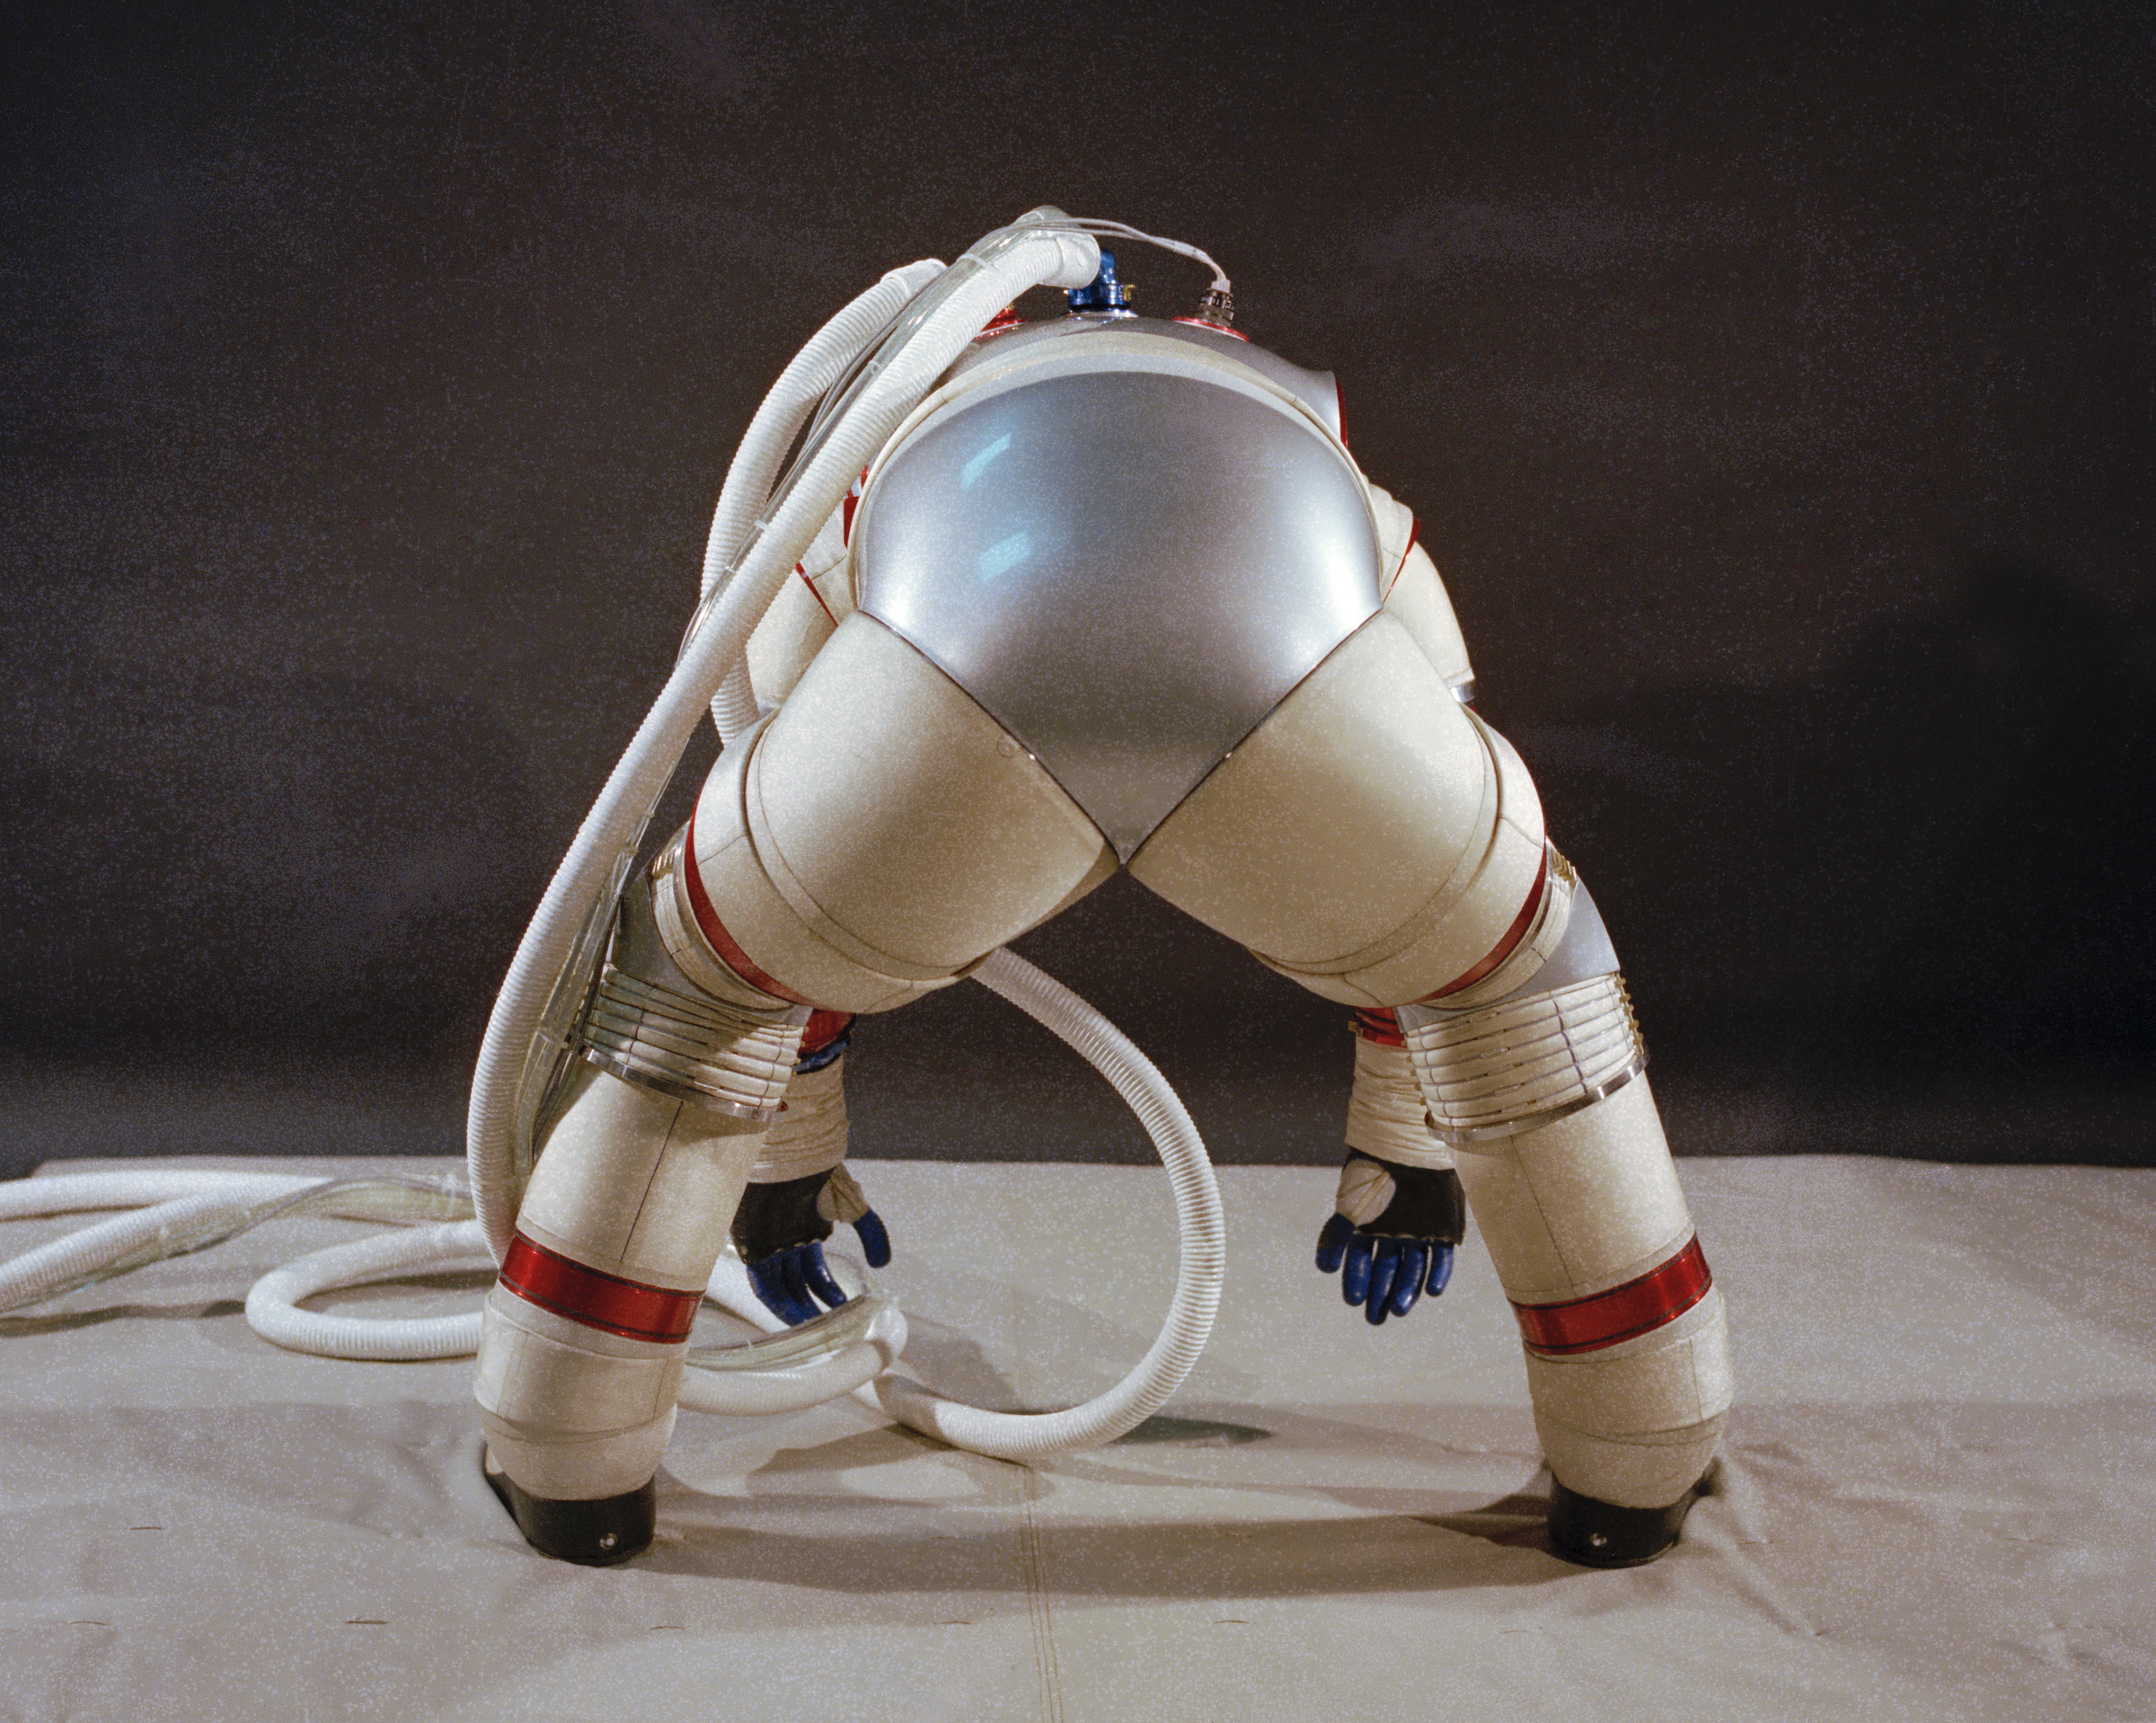 July 22, 1977 Photographer: Lee Jones Hubert Vykukal demonstrates mobility of the Hardsuit AX-3 Space Suit design